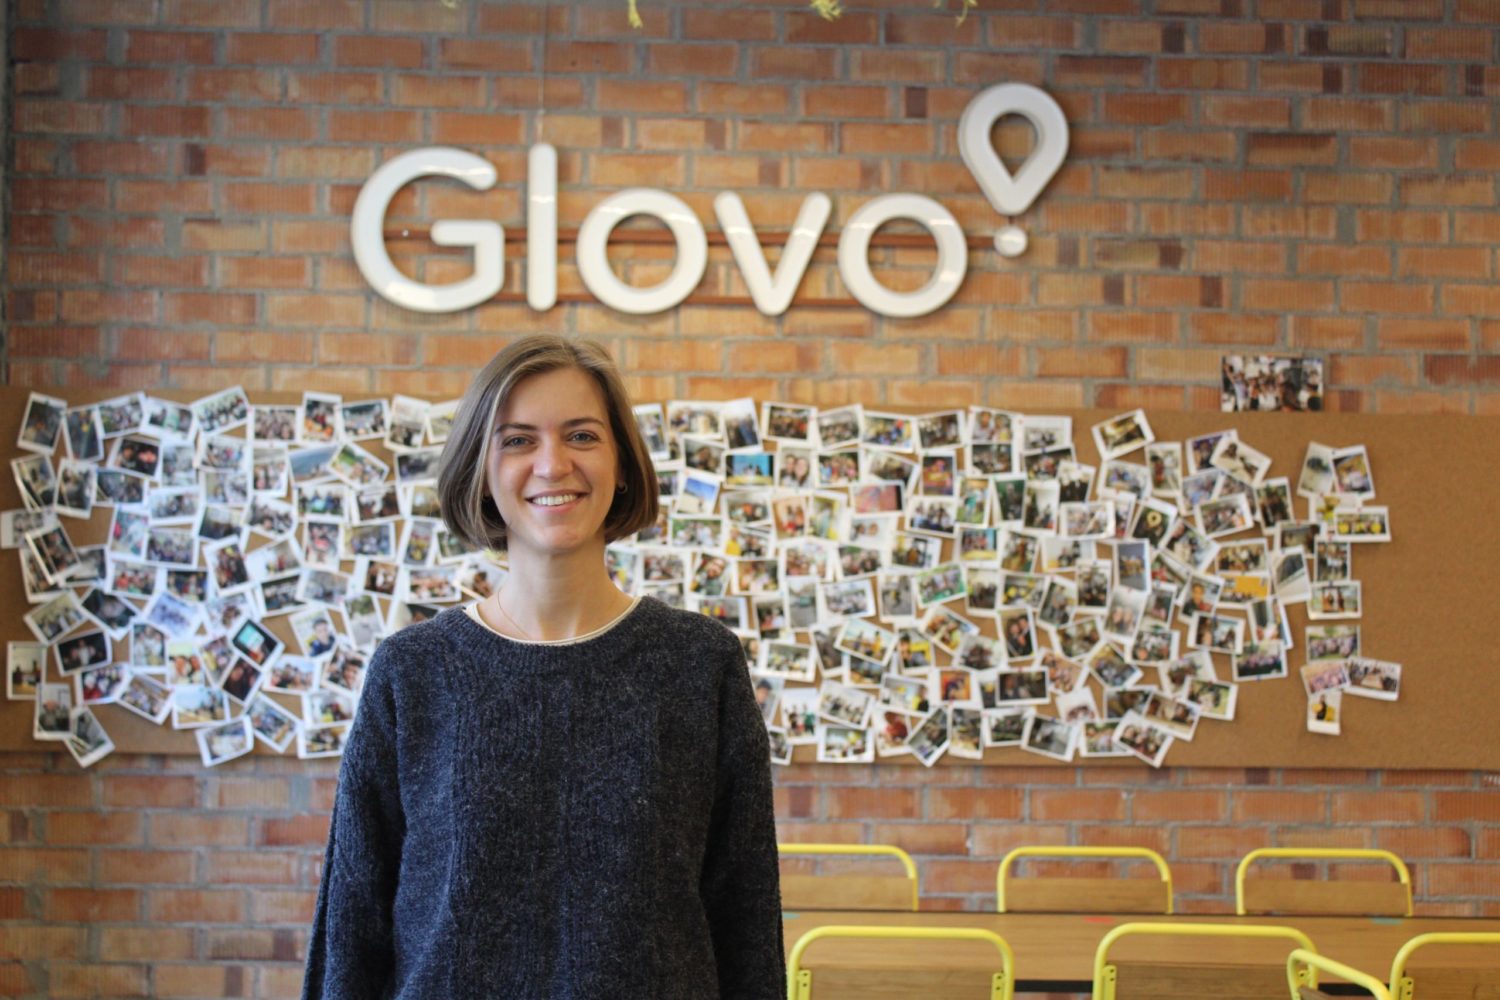 Glovo incorpora a Ana Champetier como Directora General de Food Innovation - Just Retail